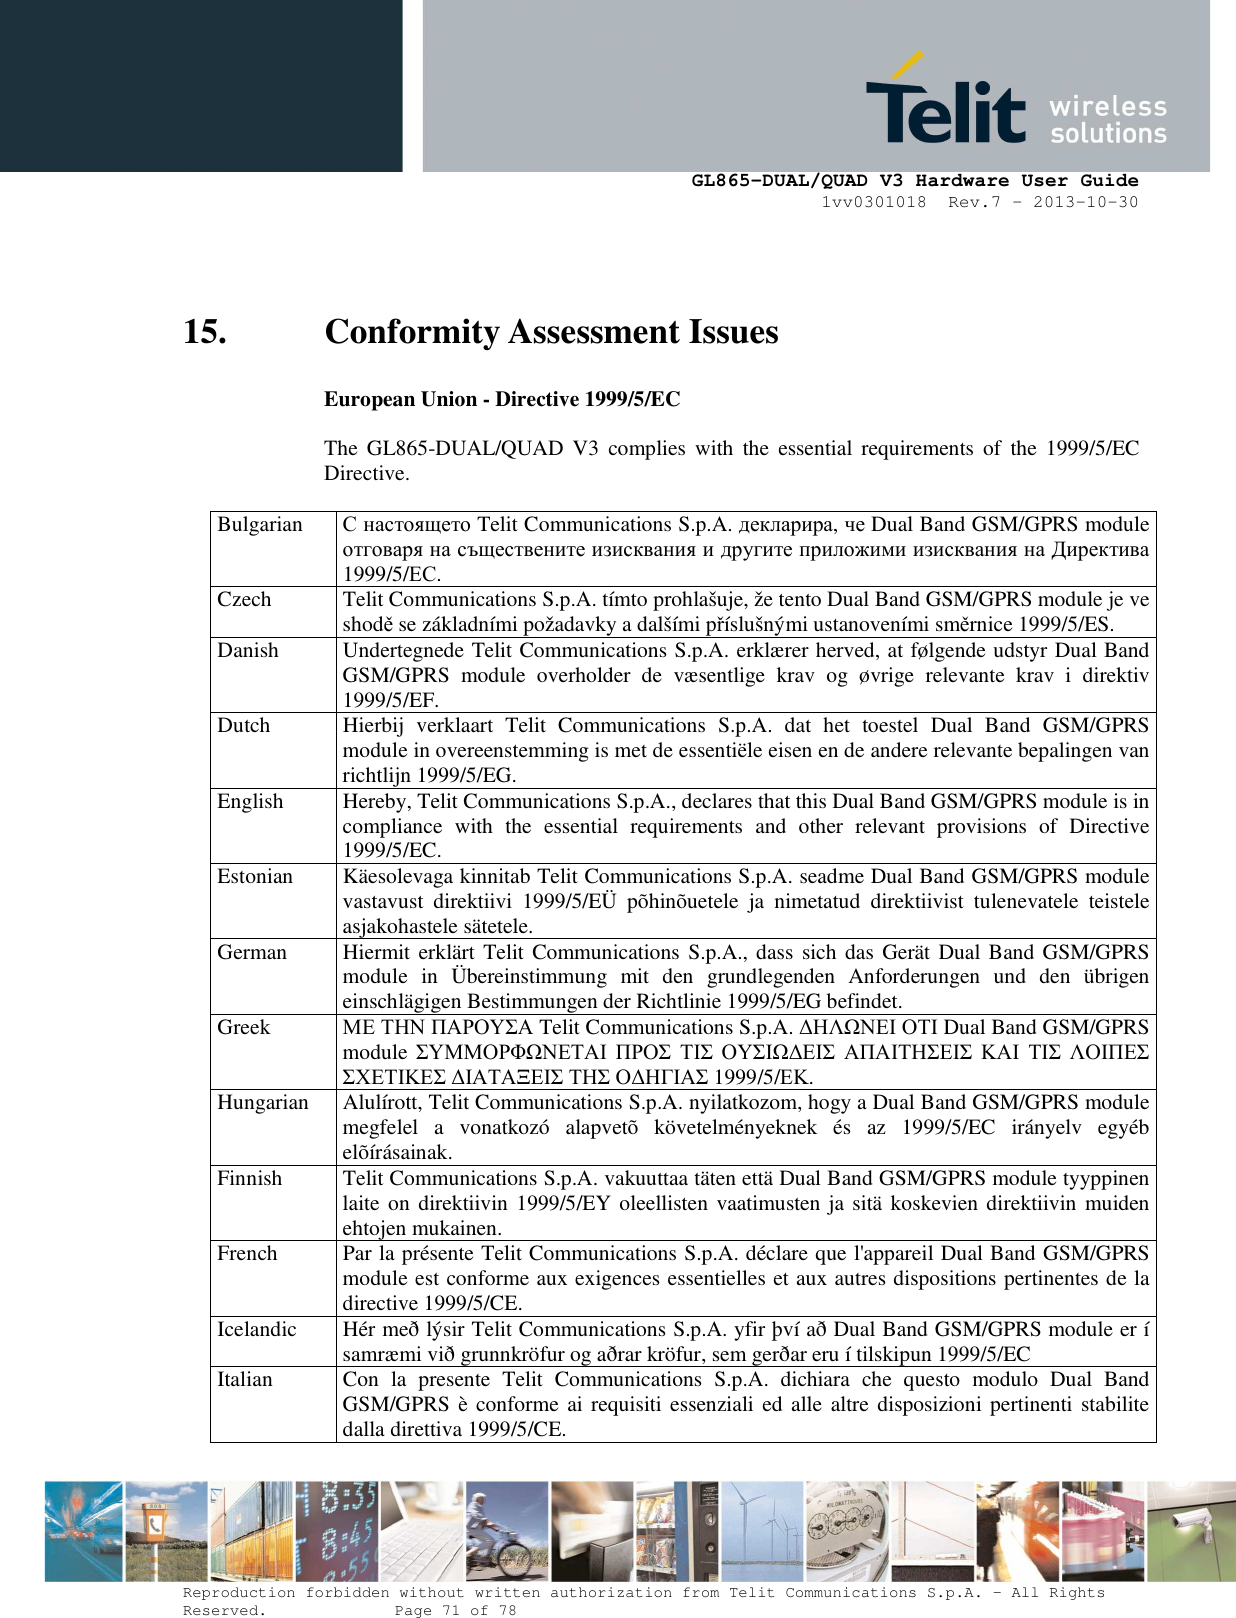      GL865-DUAL/QUAD V3 Hardware User Guide 1vv0301018  Rev.7 – 2013-10-30  Reproduction forbidden without written authorization from Telit Communications S.p.A. - All Rights Reserved.    Page 71 of 78 Mod. 0805 2011-07 Rev.2 15. Conformity Assessment Issues European Union - Directive 1999/5/EC  The  GL865-DUAL/QUAD V3  complies  with  the  essential  requirements  of  the  1999/5/EC Directive.  Bulgarian  С настоящето Telit Communications S.p.A. декларира, че Dual Band GSM/GPRS module отговаря на съществените изисквания и другите приложими изисквания на Директива 1999/5/ЕС. Czech  Telit Communications S.p.A. tímto prohlašuje, že tento Dual Band GSM/GPRS module je ve shodě se základními požadavky a dalšími příslušnými ustanoveními směrnice 1999/5/ES. Danish  Undertegnede Telit Communications S.p.A. erklærer herved, at følgende udstyr Dual Band GSM/GPRS  module  overholder  de  væsentlige  krav  og  øvrige  relevante  krav  i  direktiv 1999/5/EF. Dutch  Hierbij  verklaart  Telit  Communications  S.p.A.  dat  het  toestel  Dual  Band  GSM/GPRS module in overeenstemming is met de essentiële eisen en de andere relevante bepalingen van richtlijn 1999/5/EG. English  Hereby, Telit Communications S.p.A., declares that this Dual Band GSM/GPRS module is in compliance  with  the  essential  requirements  and  other  relevant  provisions  of  Directive 1999/5/EC. Estonian  Käesolevaga kinnitab Telit Communications S.p.A. seadme Dual Band GSM/GPRS module vastavust  direktiivi  1999/5/EÜ  põhinõuetele  ja  nimetatud  direktiivist  tulenevatele  teistele asjakohastele sätetele. German  Hiermit erklärt Telit Communications S.p.A., dass sich das  Gerät Dual Band GSM/GPRS module  in  Übereinstimmung  mit  den  grundlegenden  Anforderungen  und  den  übrigen einschlägigen Bestimmungen der Richtlinie 1999/5/EG befindet. Greek  ΜΕ ΤΗΝ ΠΑΡΟΥΣΑ Telit Communications S.p.A. ∆ΗΛΩΝΕΙ ΟΤΙ Dual Band GSM/GPRS module ΣΥΜΜΟΡΦΩΝΕΤΑΙ ΠΡΟΣ ΤΙΣ ΟΥΣΙΩ∆ΕΙΣ ΑΠΑΙΤΗΣΕΙΣ ΚΑΙ ΤΙΣ ΛΟΙΠΕΣ ΣΧΕΤΙΚΕΣ ∆ΙΑΤΑΞΕΙΣ ΤΗΣ Ο∆ΗΓΙΑΣ 1999/5/ΕΚ. Hungarian  Alulírott, Telit Communications S.p.A. nyilatkozom, hogy a Dual Band GSM/GPRS module megfelel  a  vonatkozó  alapvetõ  követelményeknek  és  az  1999/5/EC  irányelv  egyéb elõírásainak. Finnish  Telit Communications S.p.A. vakuuttaa täten että Dual Band GSM/GPRS module tyyppinen laite on direktiivin 1999/5/EY oleellisten vaatimusten ja sitä koskevien direktiivin  muiden ehtojen mukainen. French  Par la présente Telit Communications S.p.A. déclare que l&apos;appareil Dual Band GSM/GPRS module est conforme aux exigences essentielles et aux autres dispositions pertinentes de la directive 1999/5/CE. Icelandic  Hér með lýsir Telit Communications S.p.A. yfir því að Dual Band GSM/GPRS module er í samræmi við grunnkröfur og aðrar kröfur, sem gerðar eru í tilskipun 1999/5/EC Italian  Con  la  presente  Telit  Communications  S.p.A.  dichiara  che  questo  modulo  Dual  Band GSM/GPRS è conforme ai requisiti essenziali ed alle altre disposizioni pertinenti stabilite dalla direttiva 1999/5/CE. 